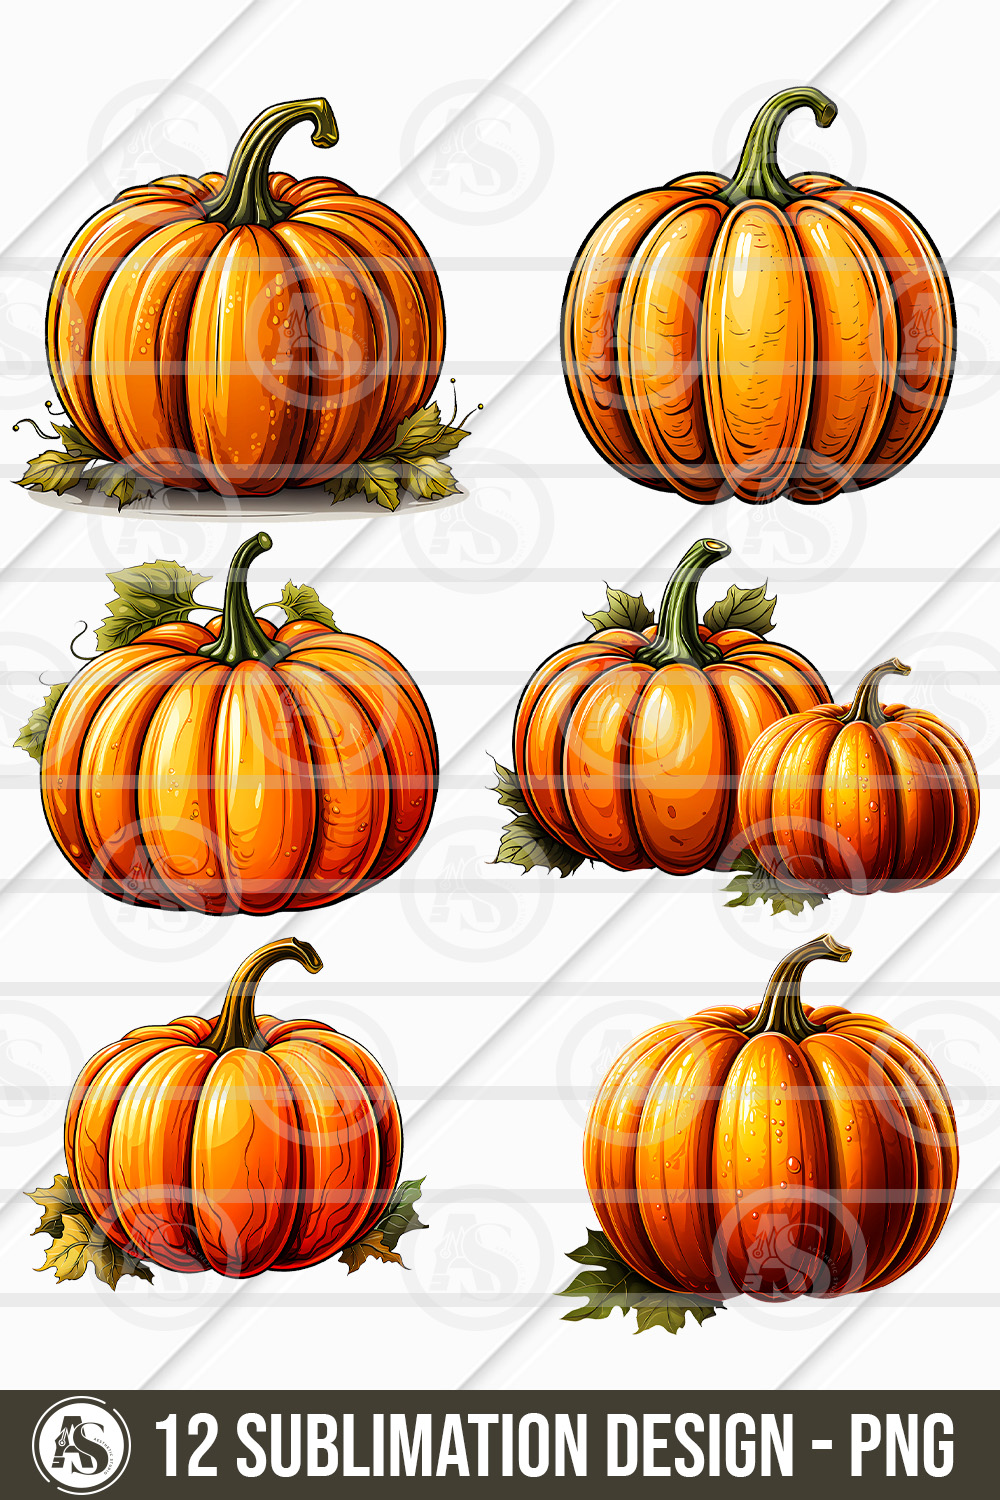 Pumpkin Sublimation PNG, Pumpkin Png, Sublimation Design, Fall Svg, Thanksgiving Svg, Pumpkin Clipart, Fall Pumpkin, Autumn Png, Pumpkin, Digital Download pinterest preview image.